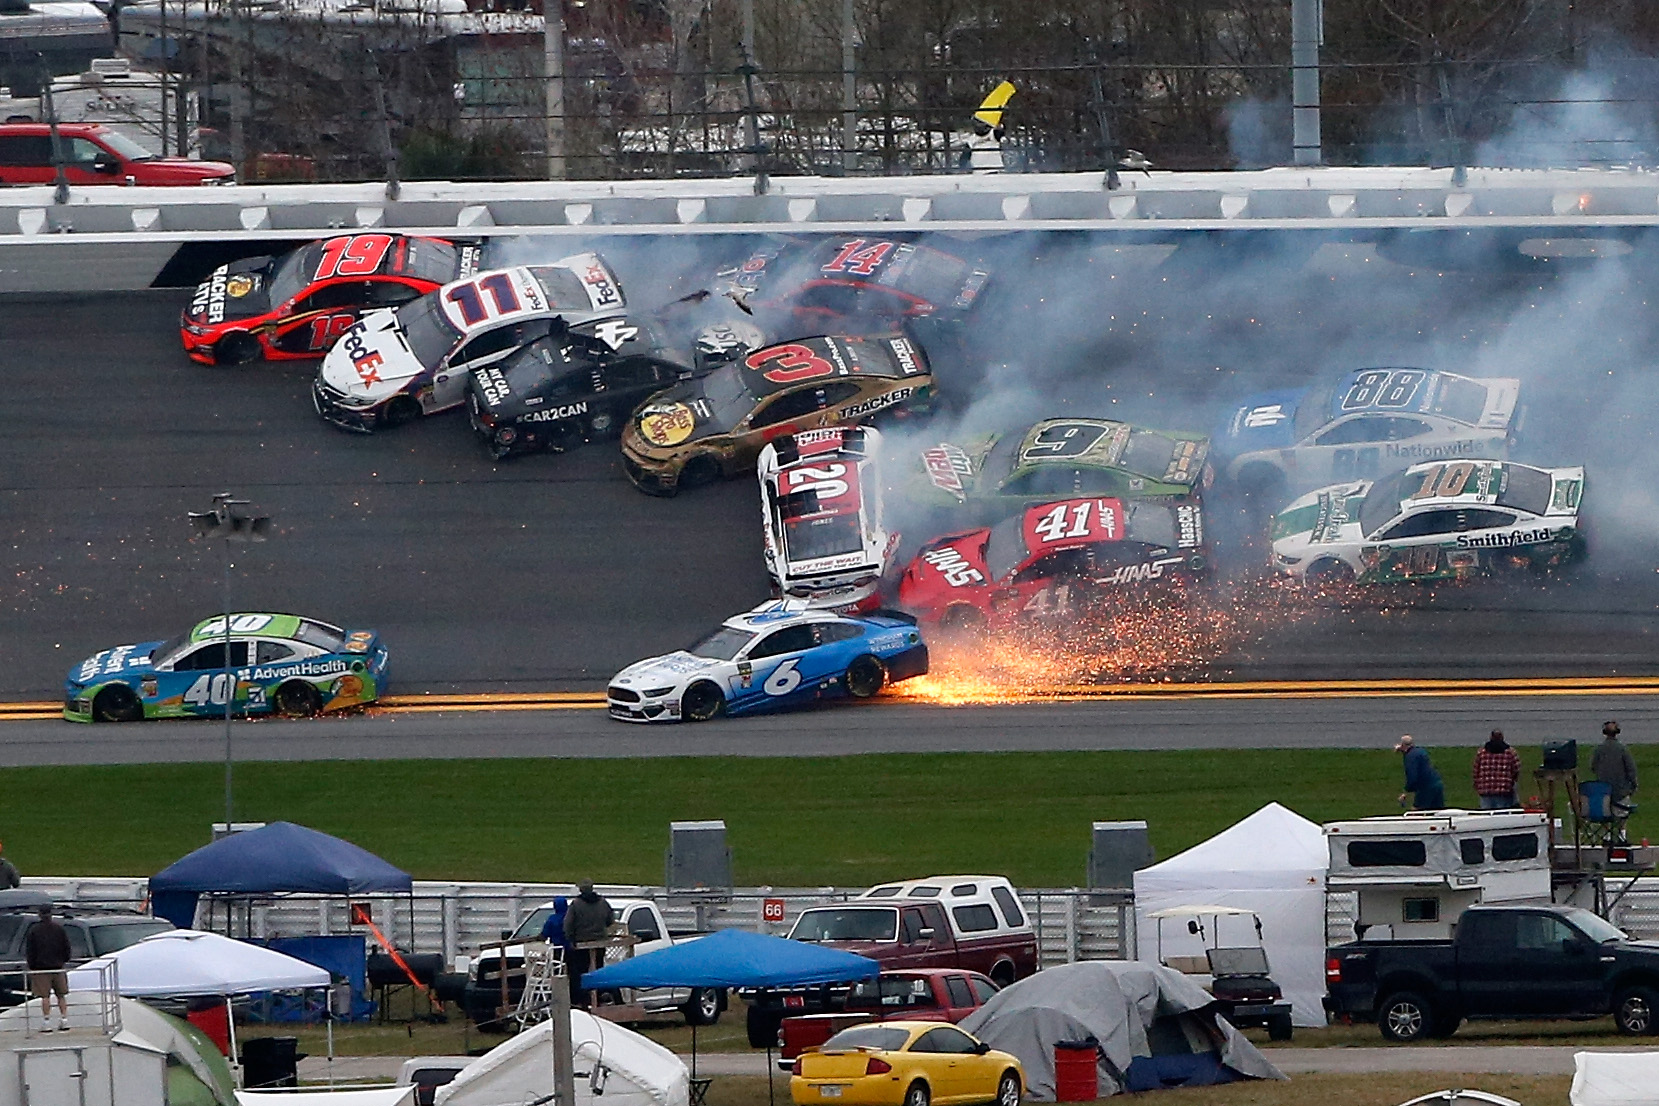 The Largest Crash in NASCAR History Had No Tragic Deaths